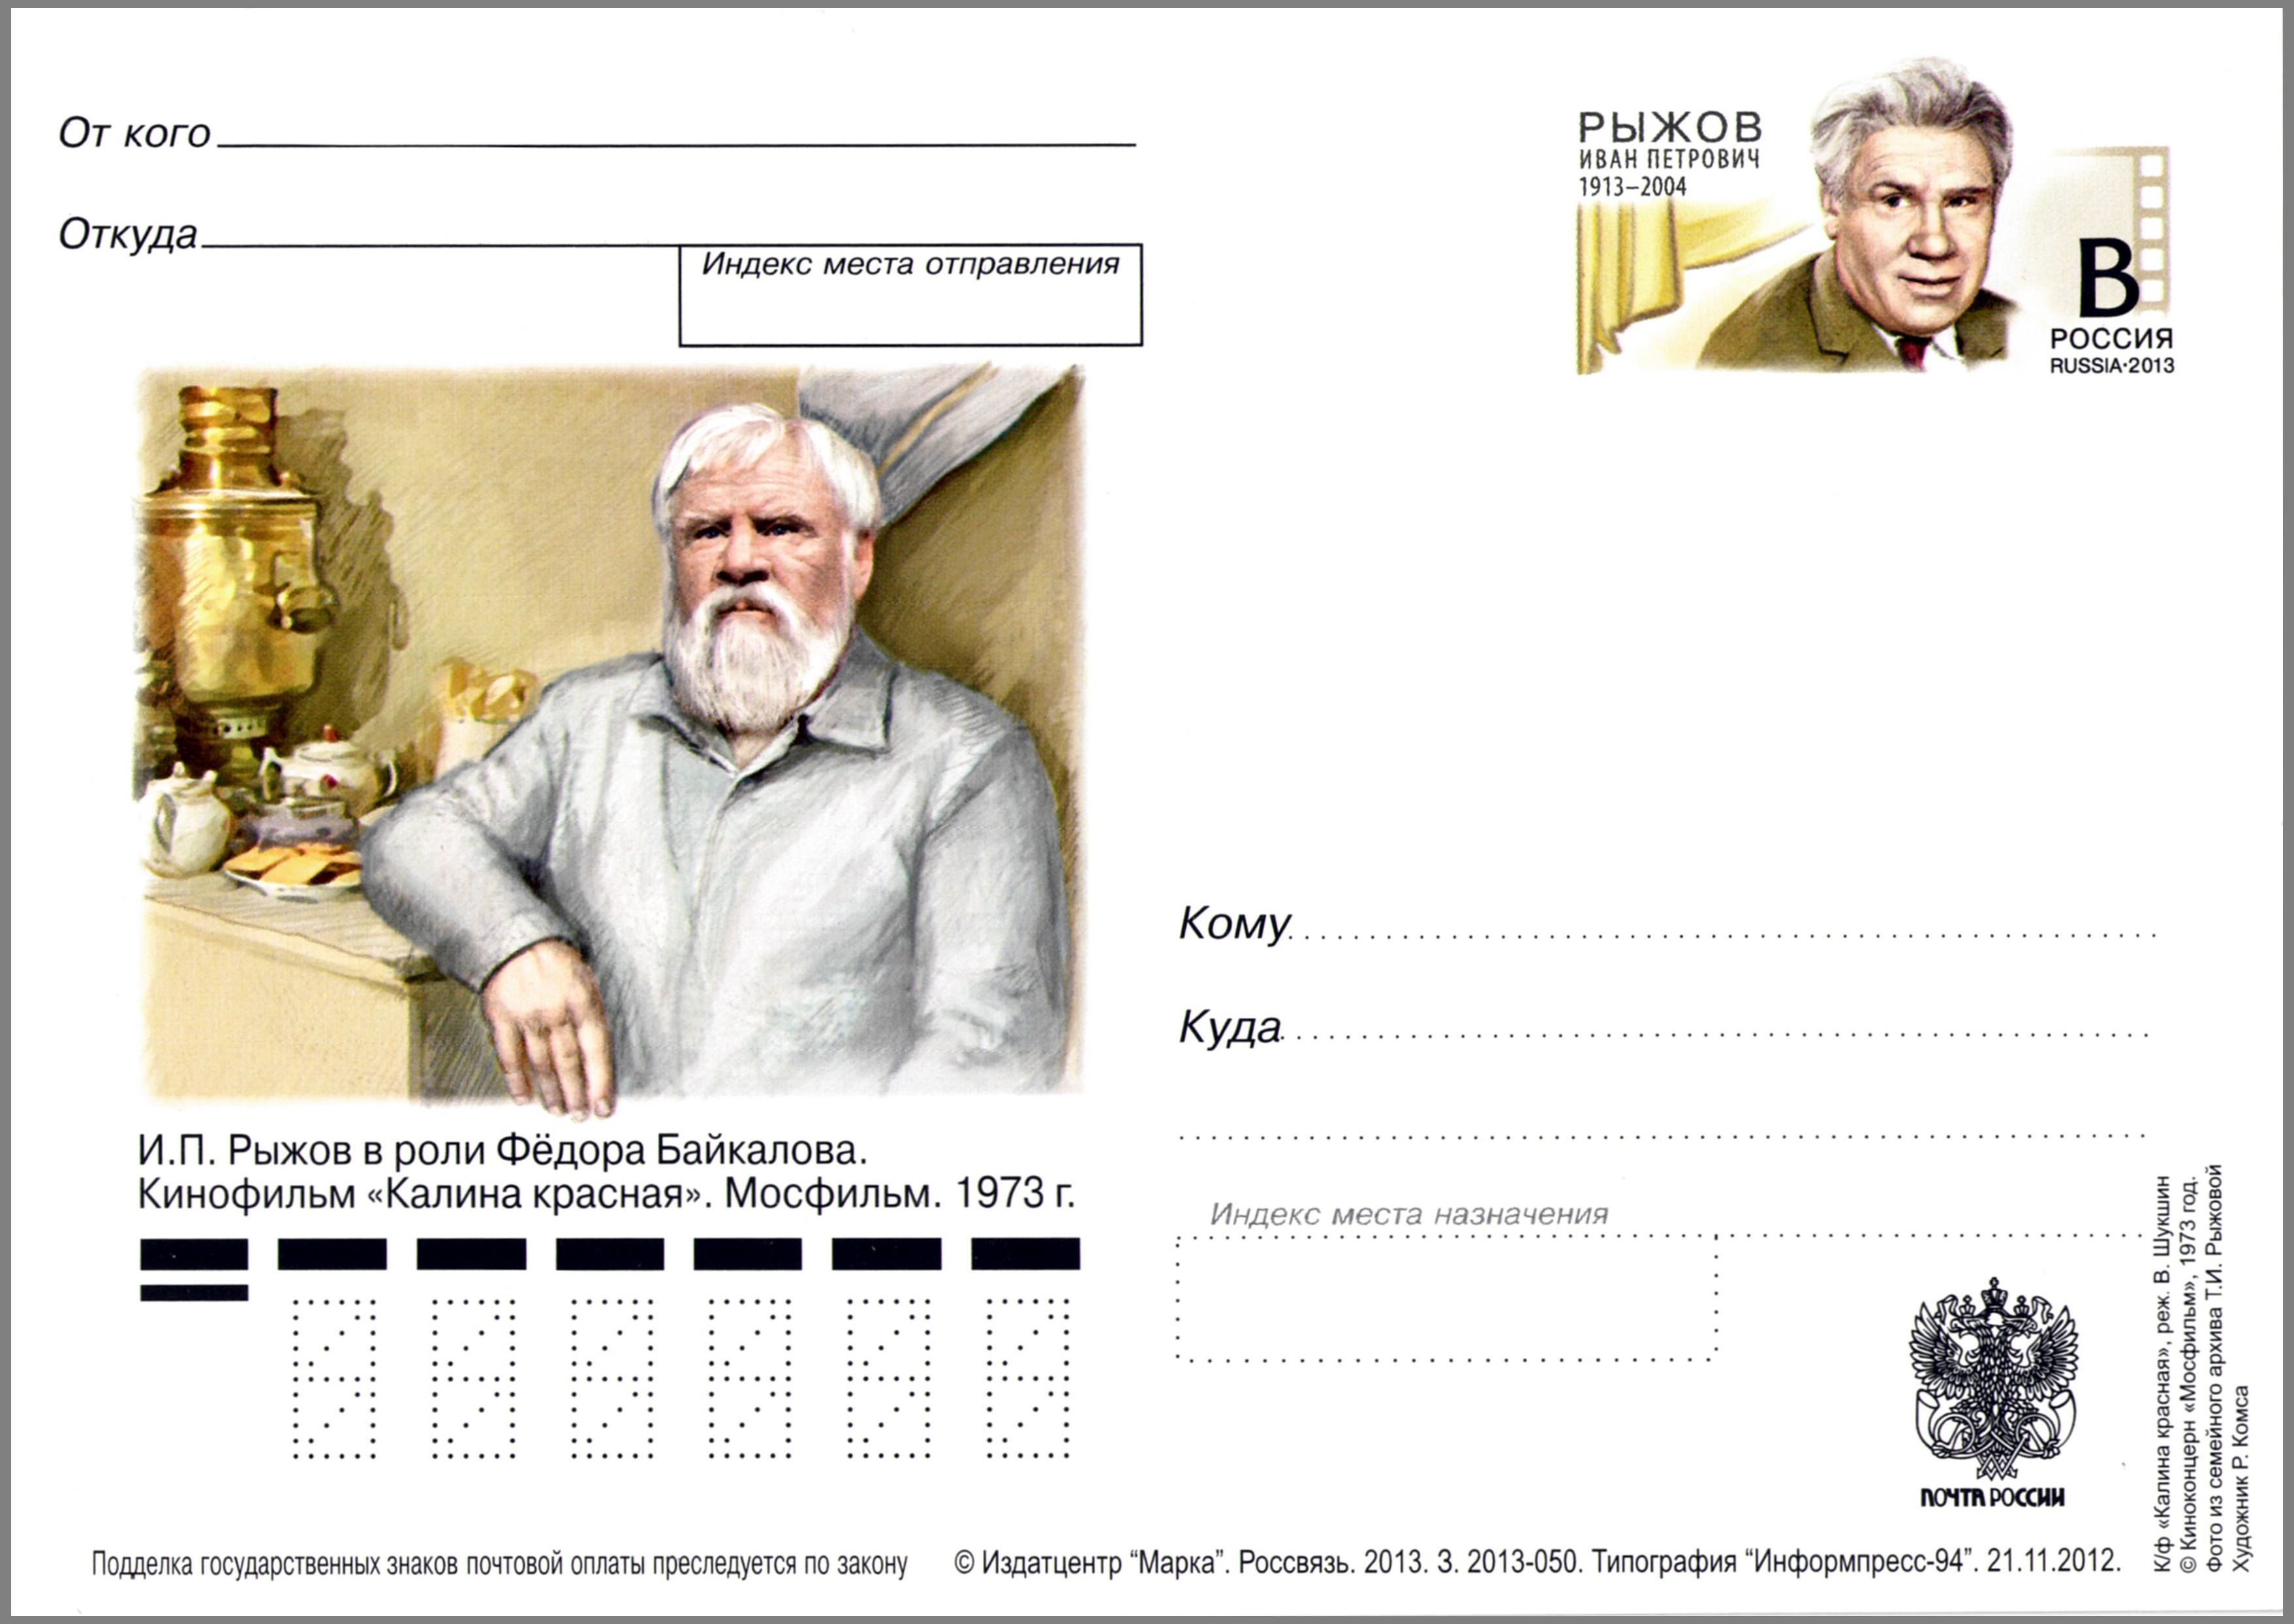 Ivan Ryzhov Postal card Russia 2013